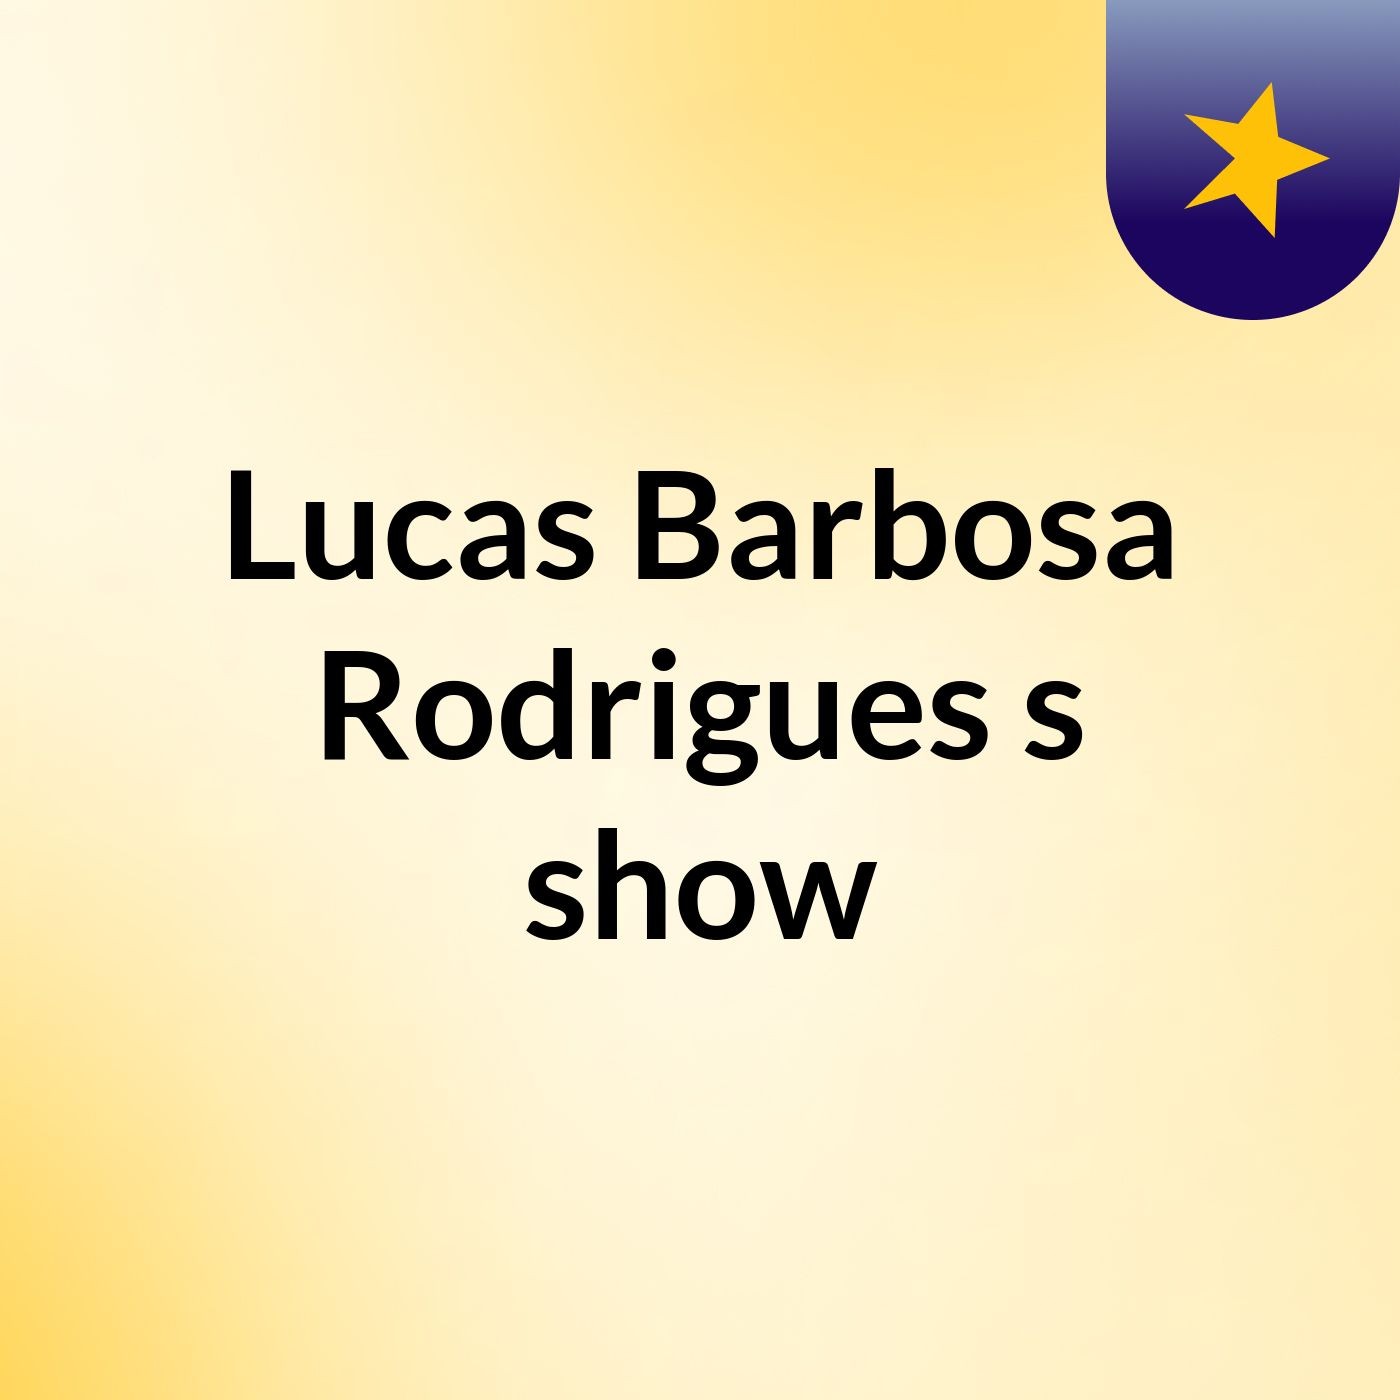 Lucas Barbosa Rodrigues's show